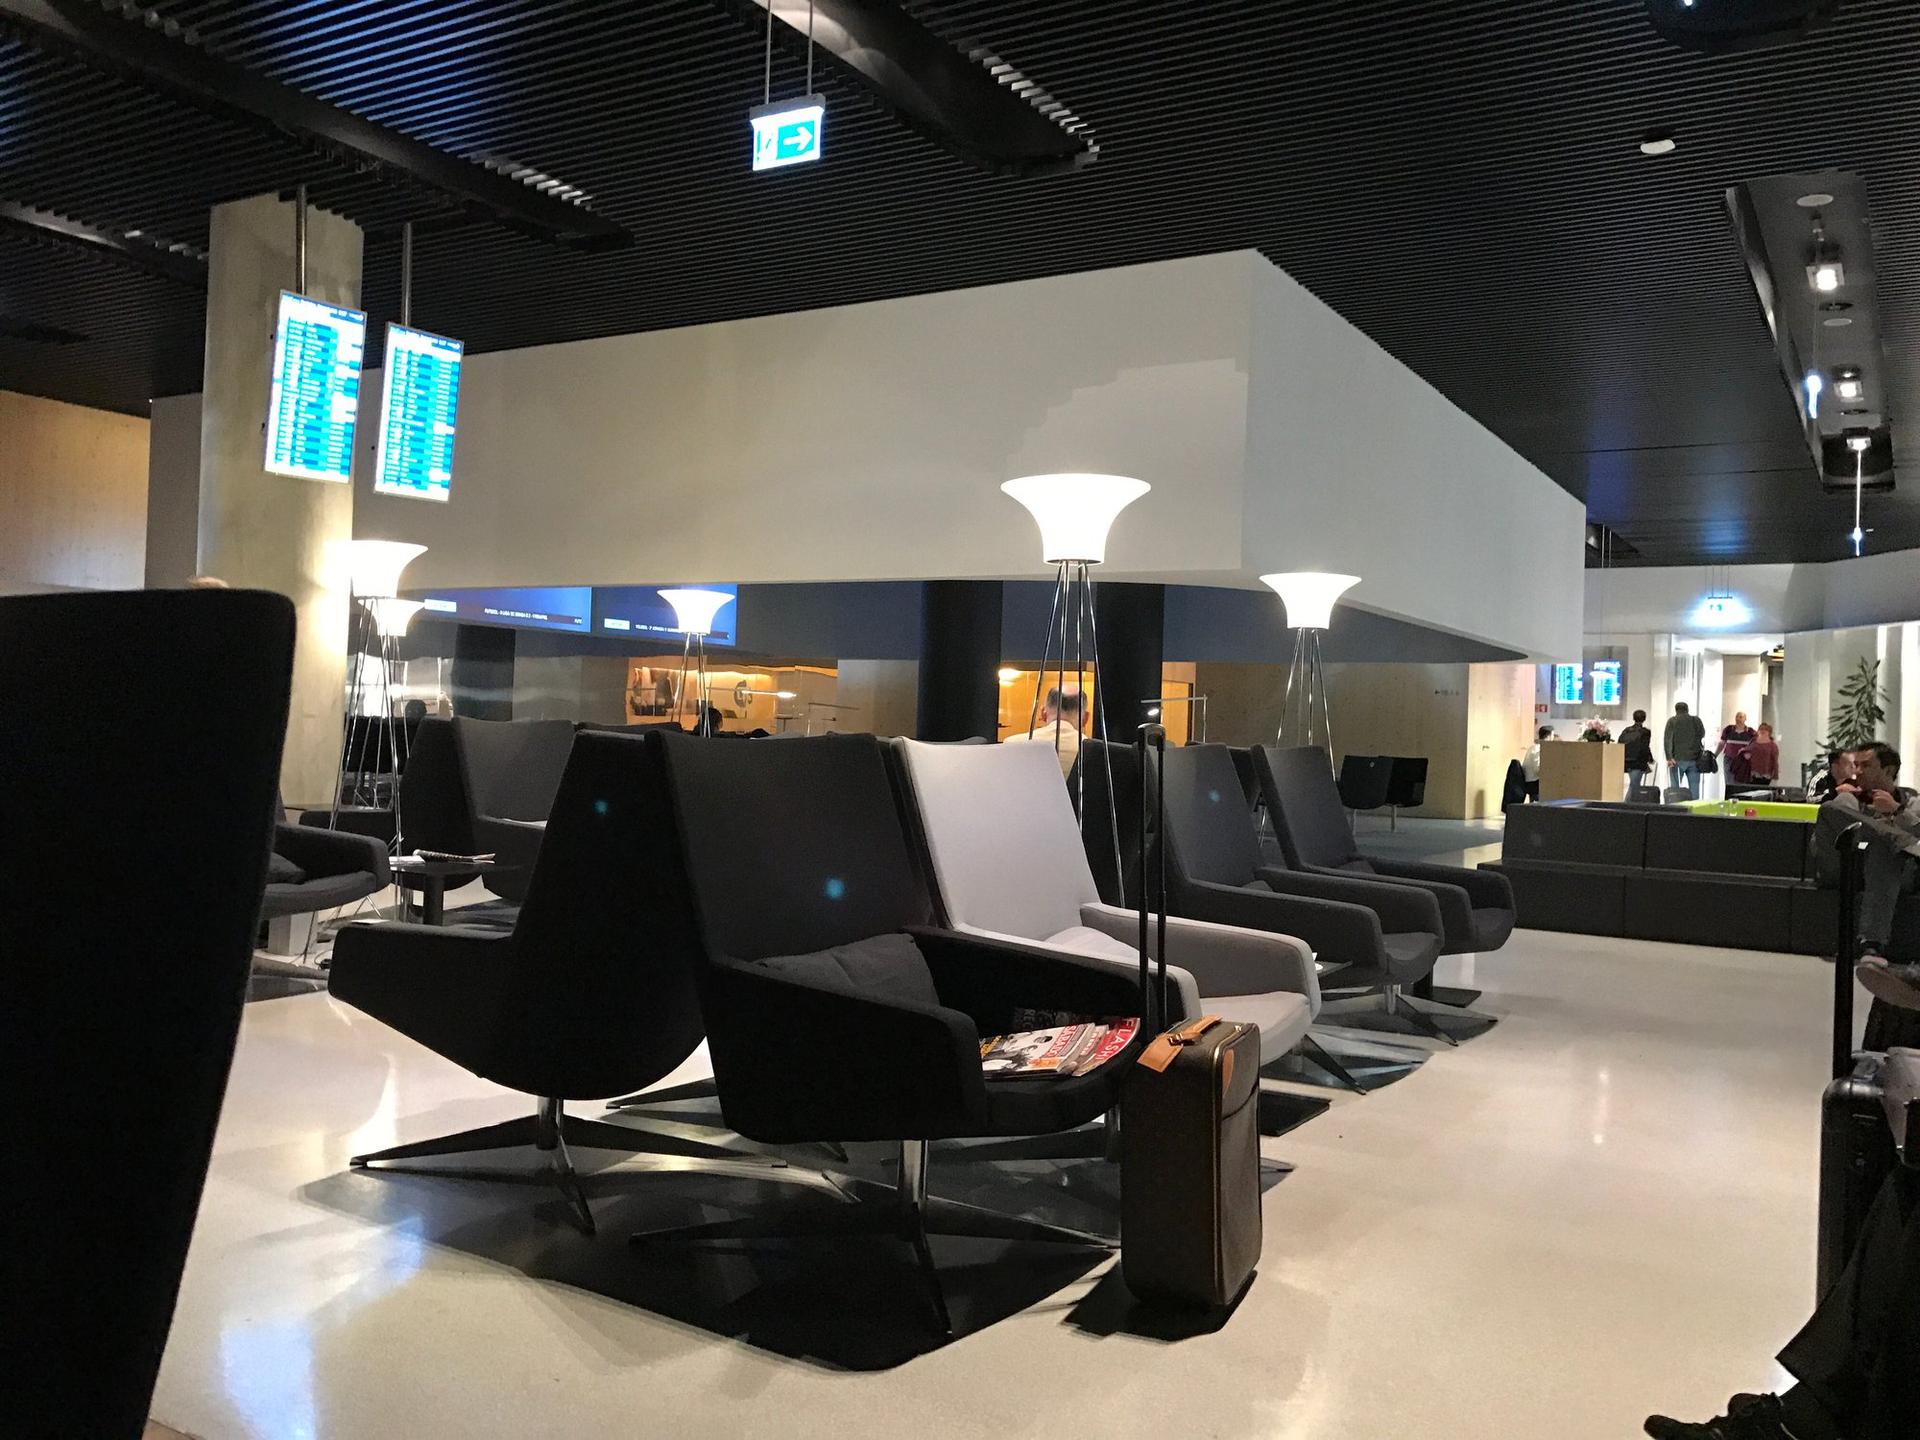 ANA Airport Lounge image 23 of 49